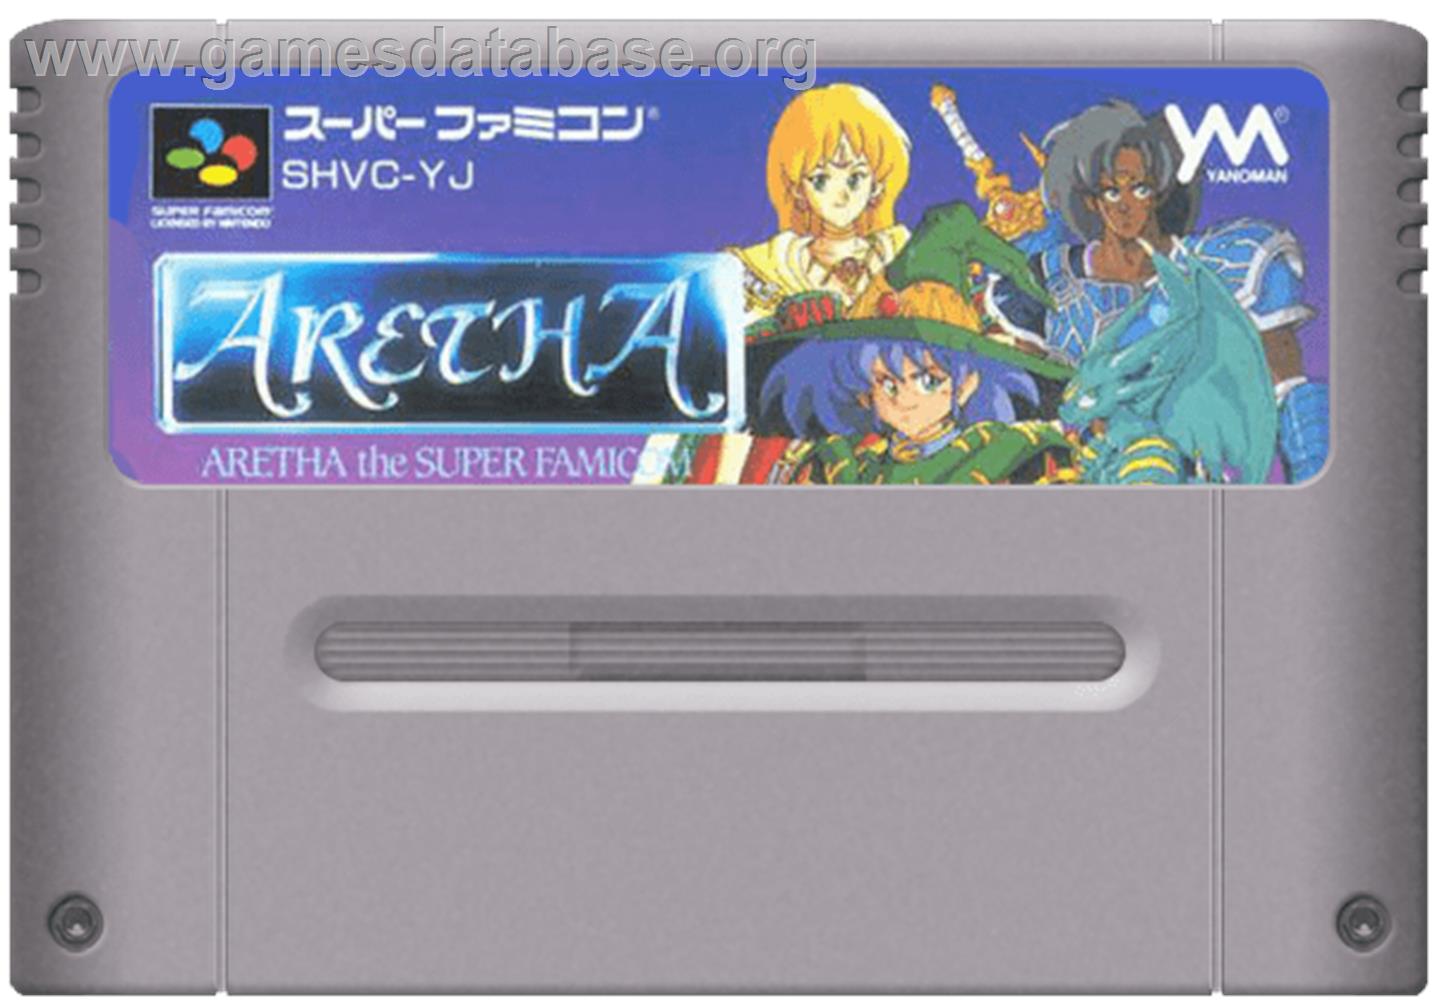 Aretha - Nintendo SNES - Artwork - Cartridge